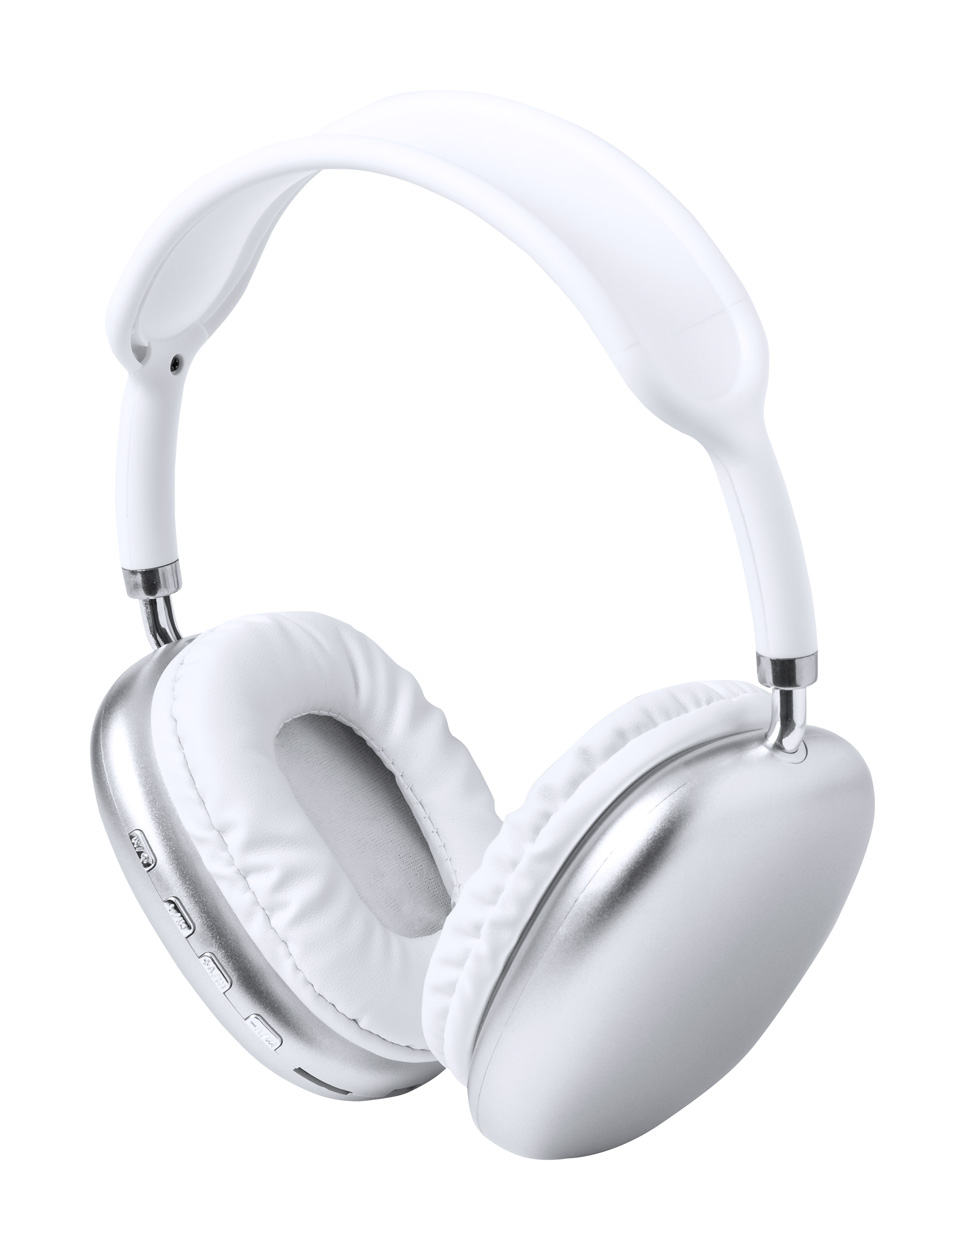 Curney bluetooth headphones - white